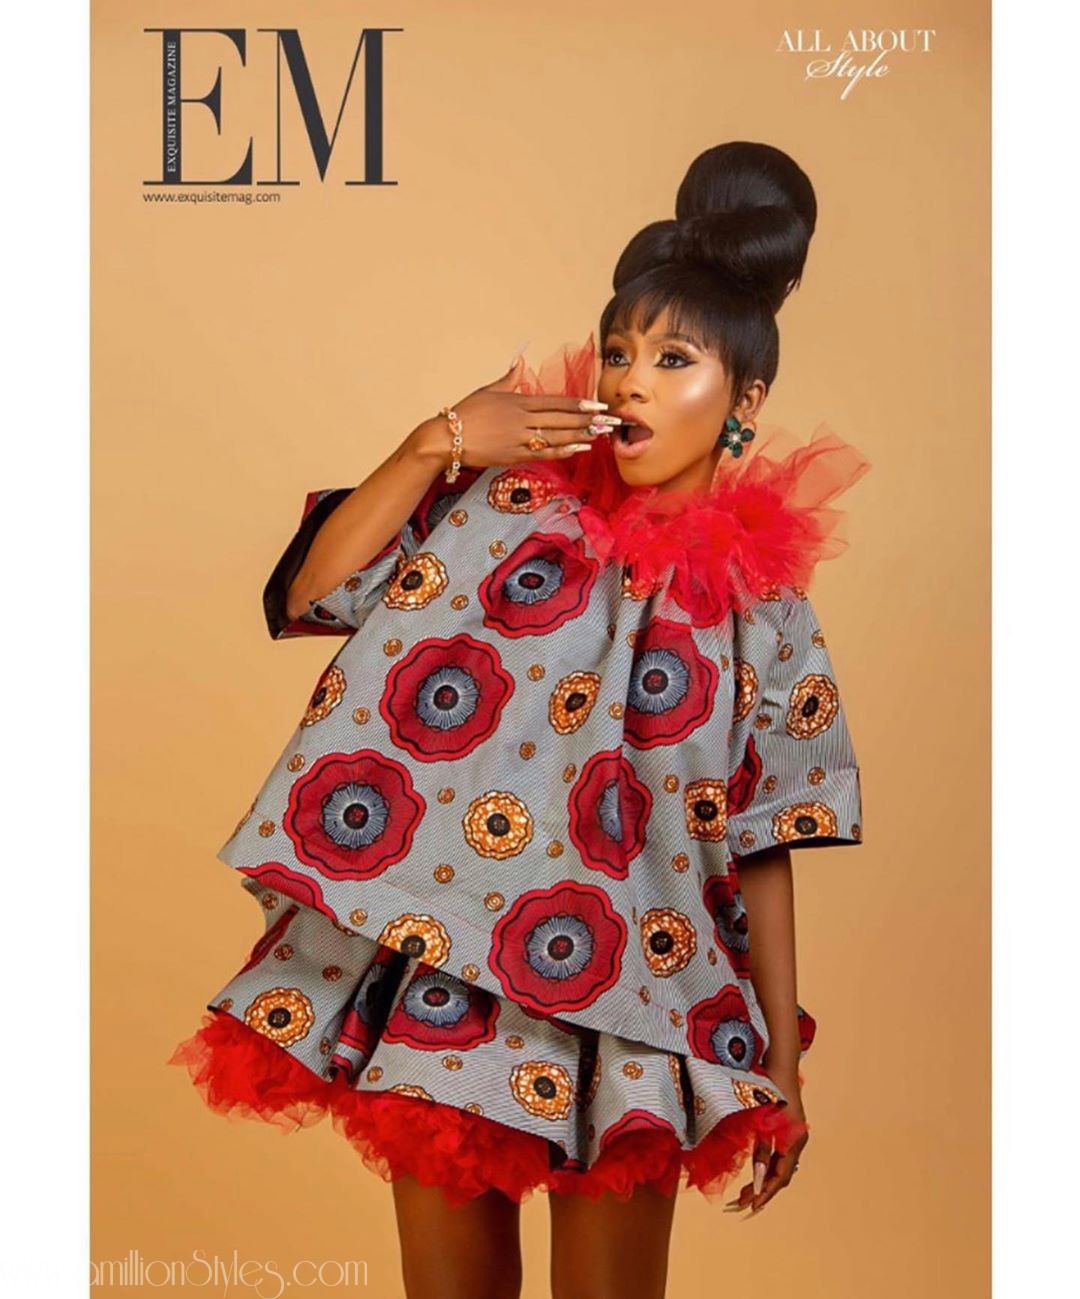 BBNaija Winner, Mercy Eke Graces The Front Cover Of Exquisite Magazine